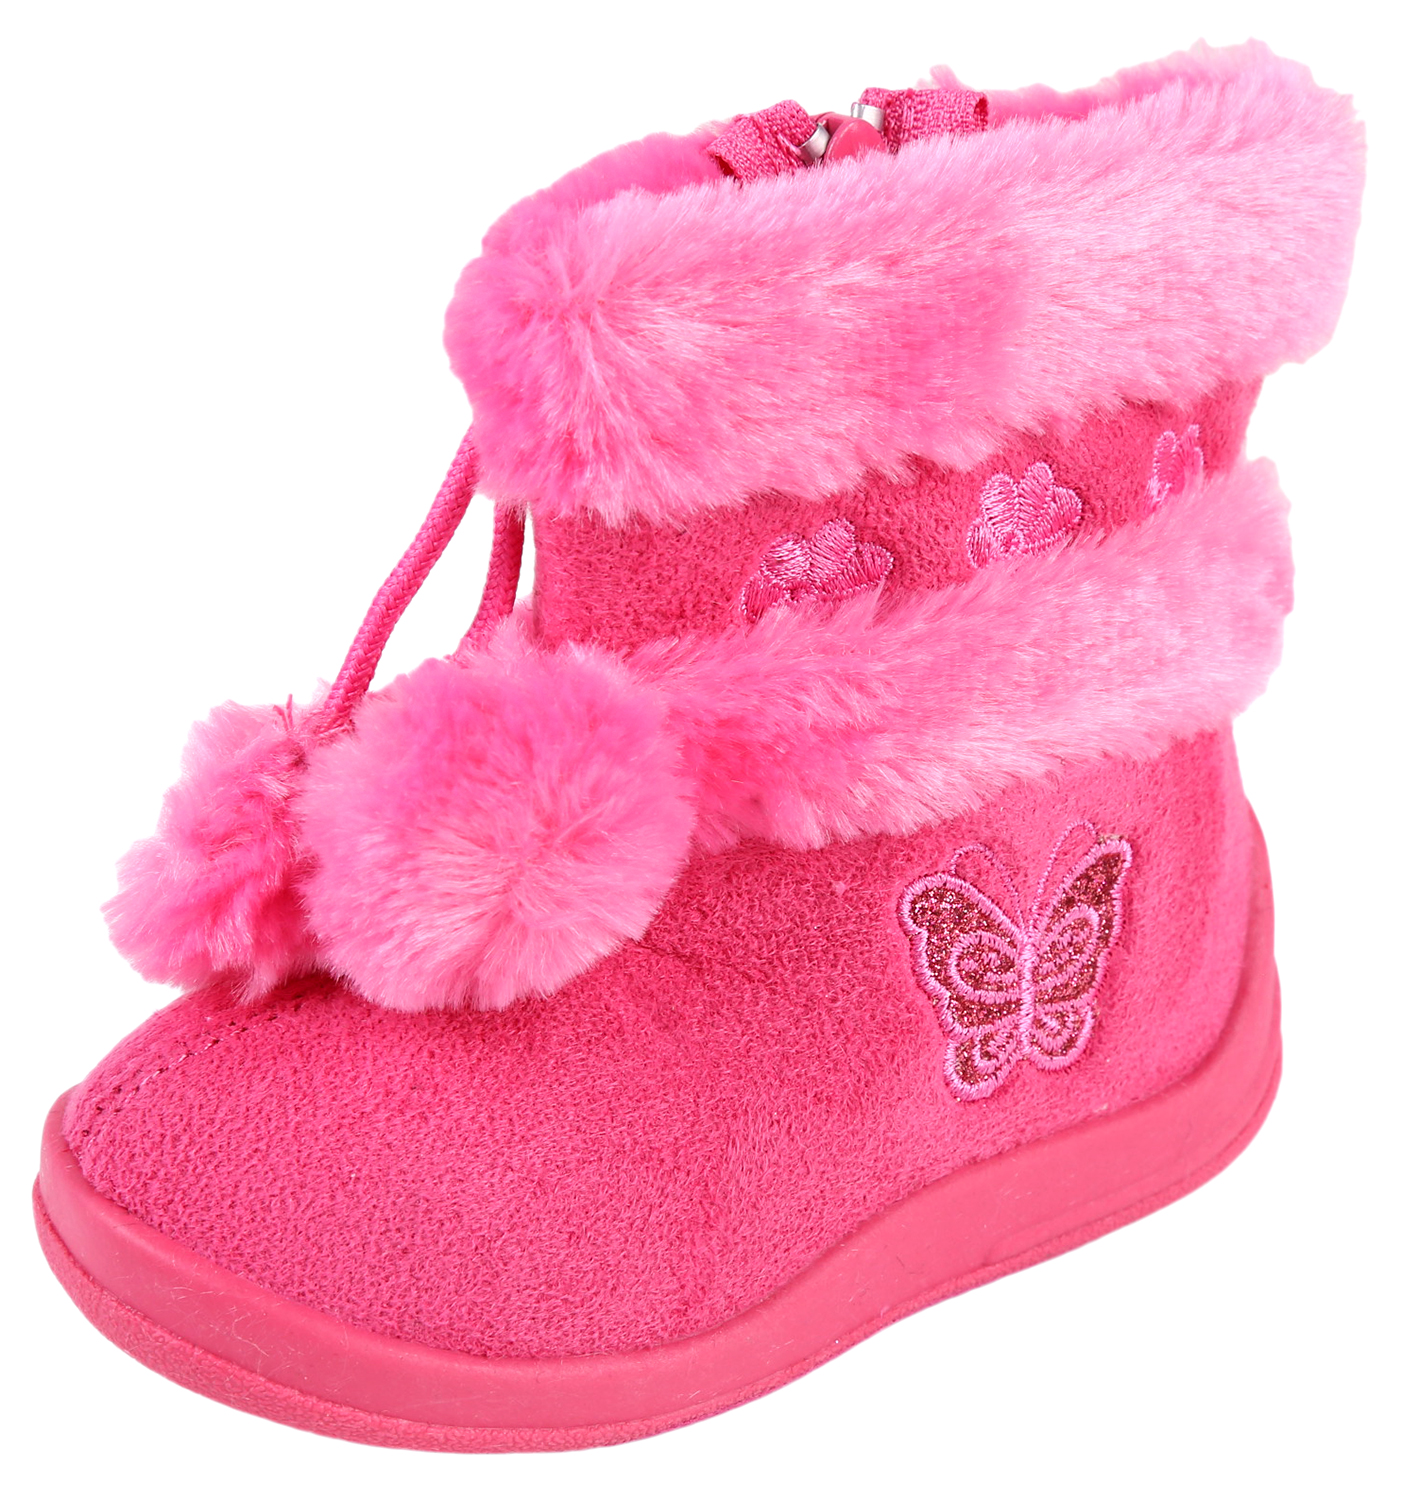 Kali Footwear Girl's Zello Boots for Toddler Girls | Glitter Boots | Pom Pom | Hot Pink 9 Toddler - image 1 of 5